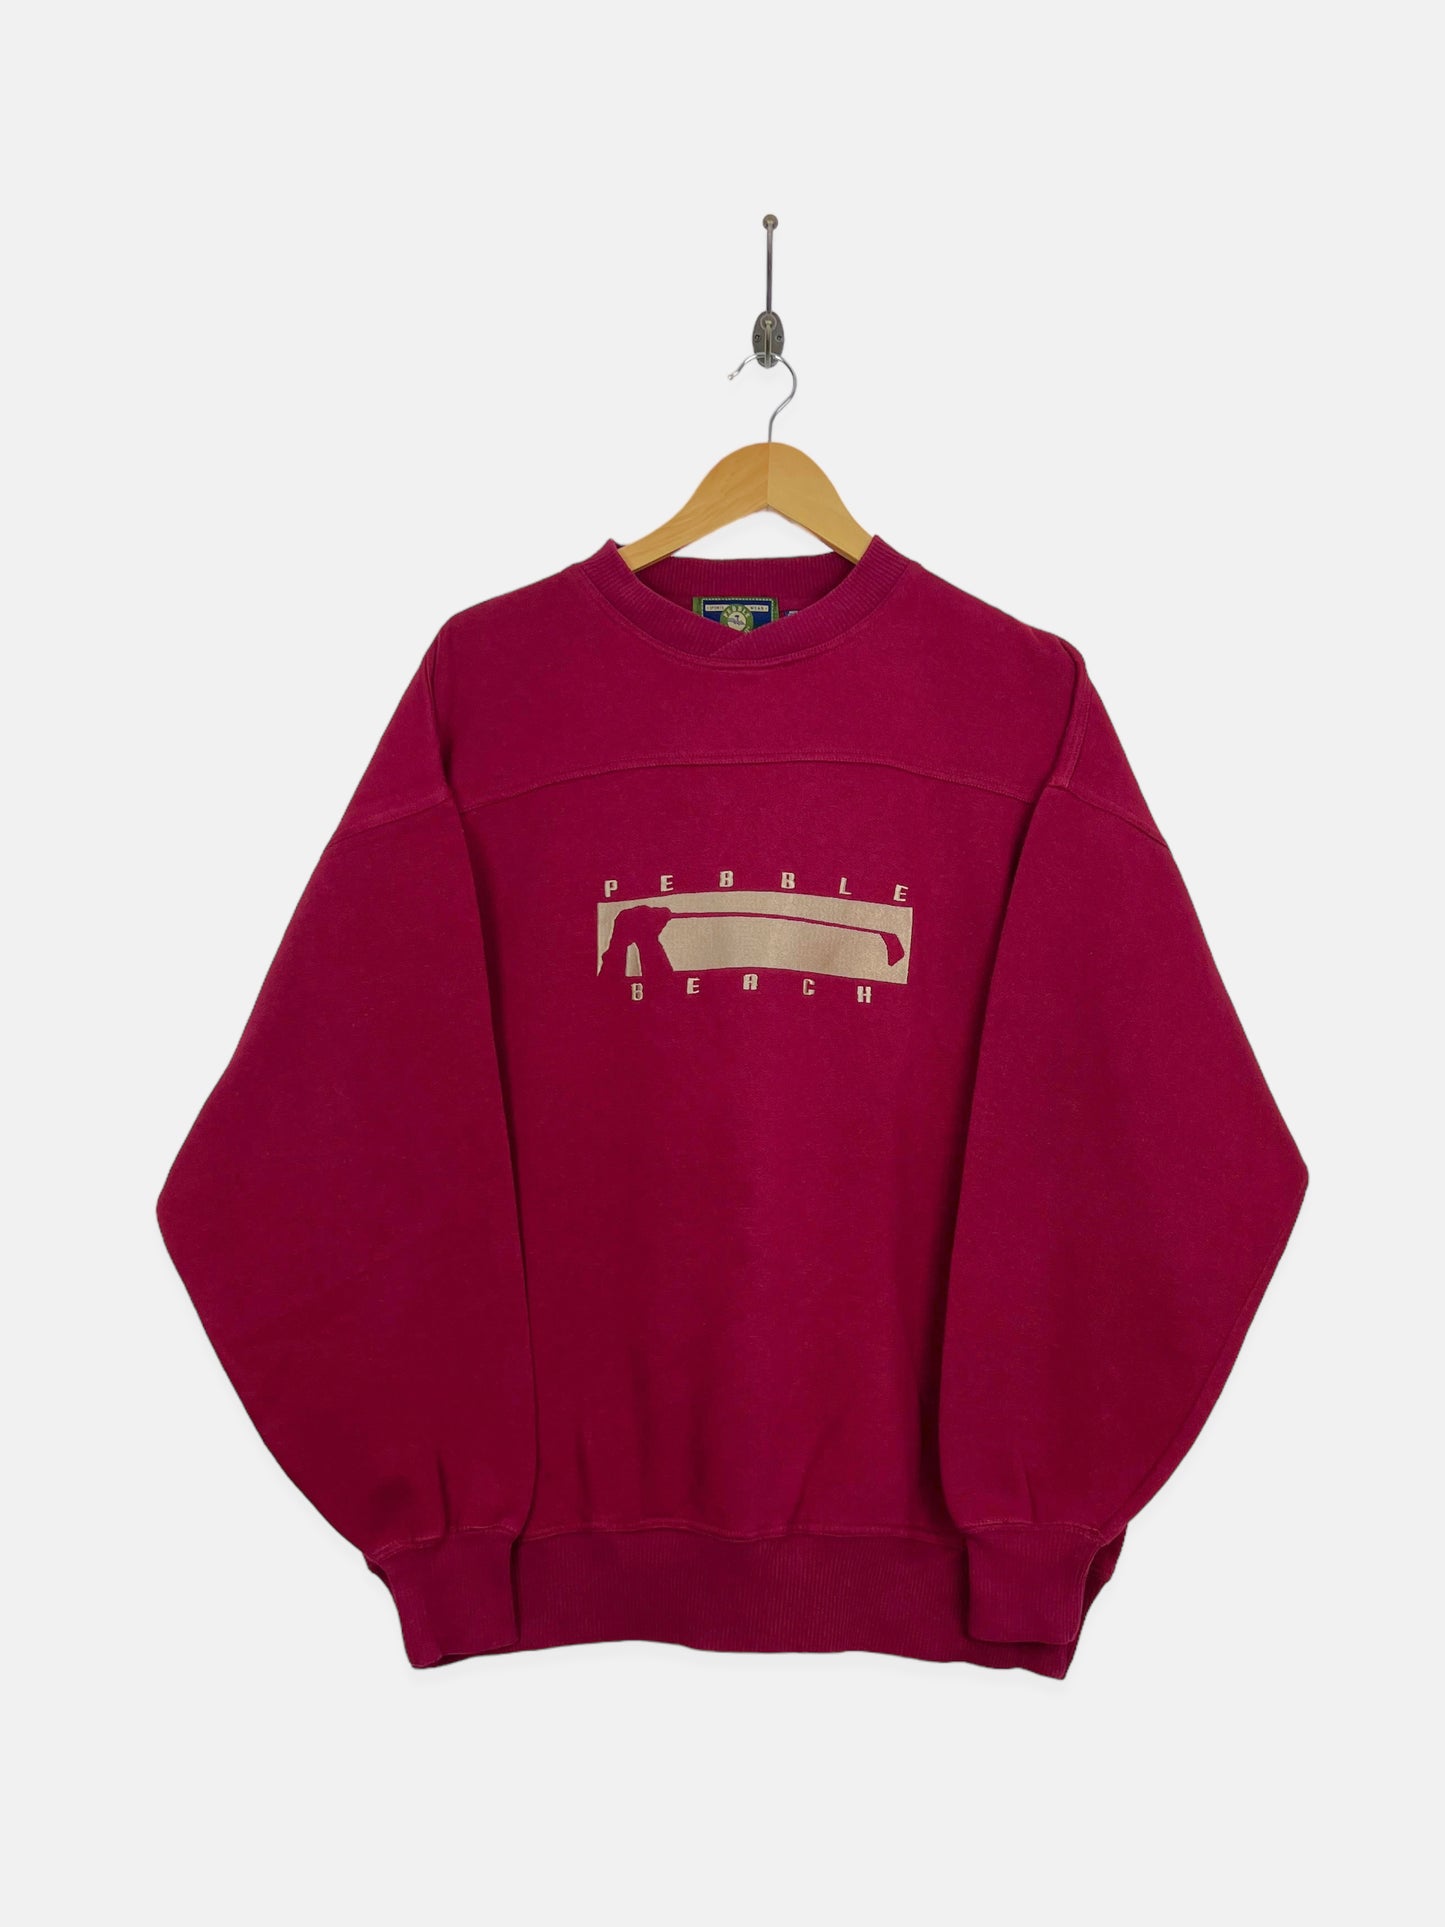 90's Pebble Beach Golf Embroidered Vintage Sweatshirt Size L-XL